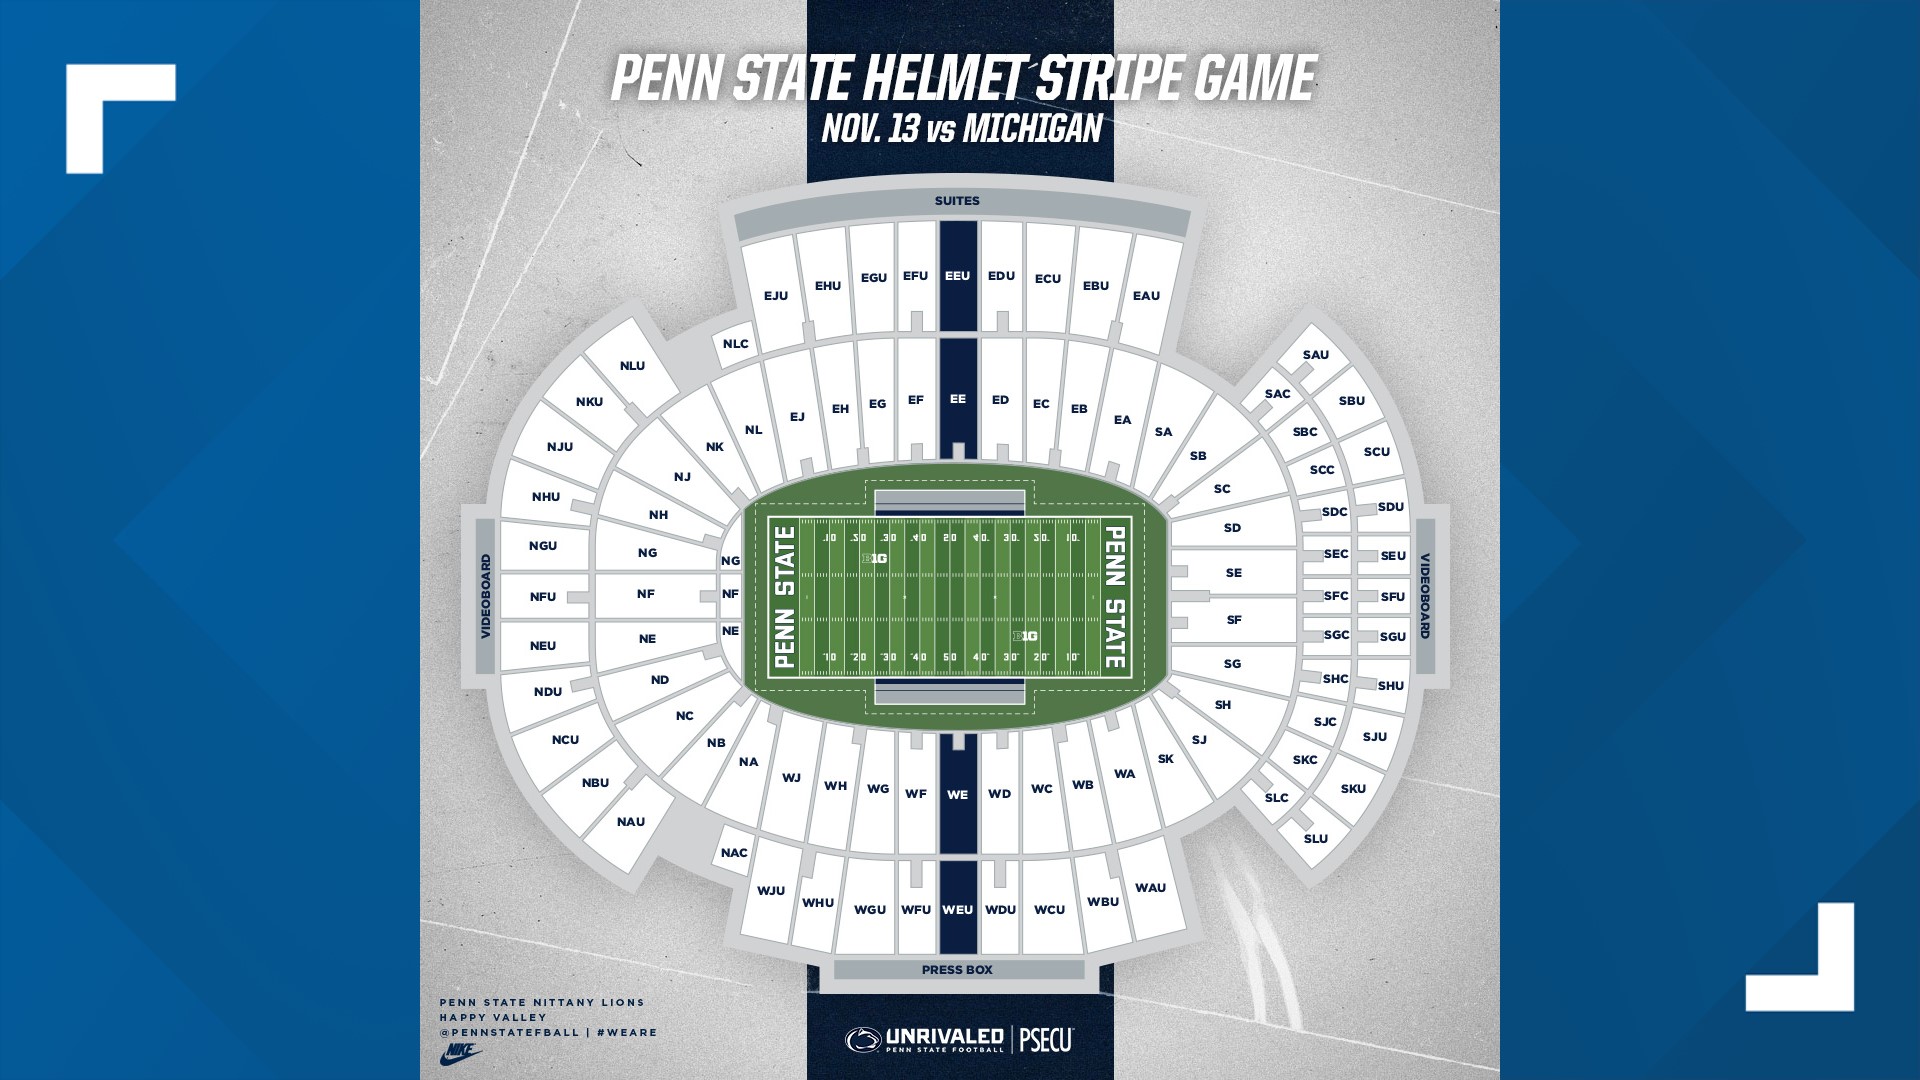 Penn State's Nov. 13 game against Michigan is now a 'Helmet Stripe